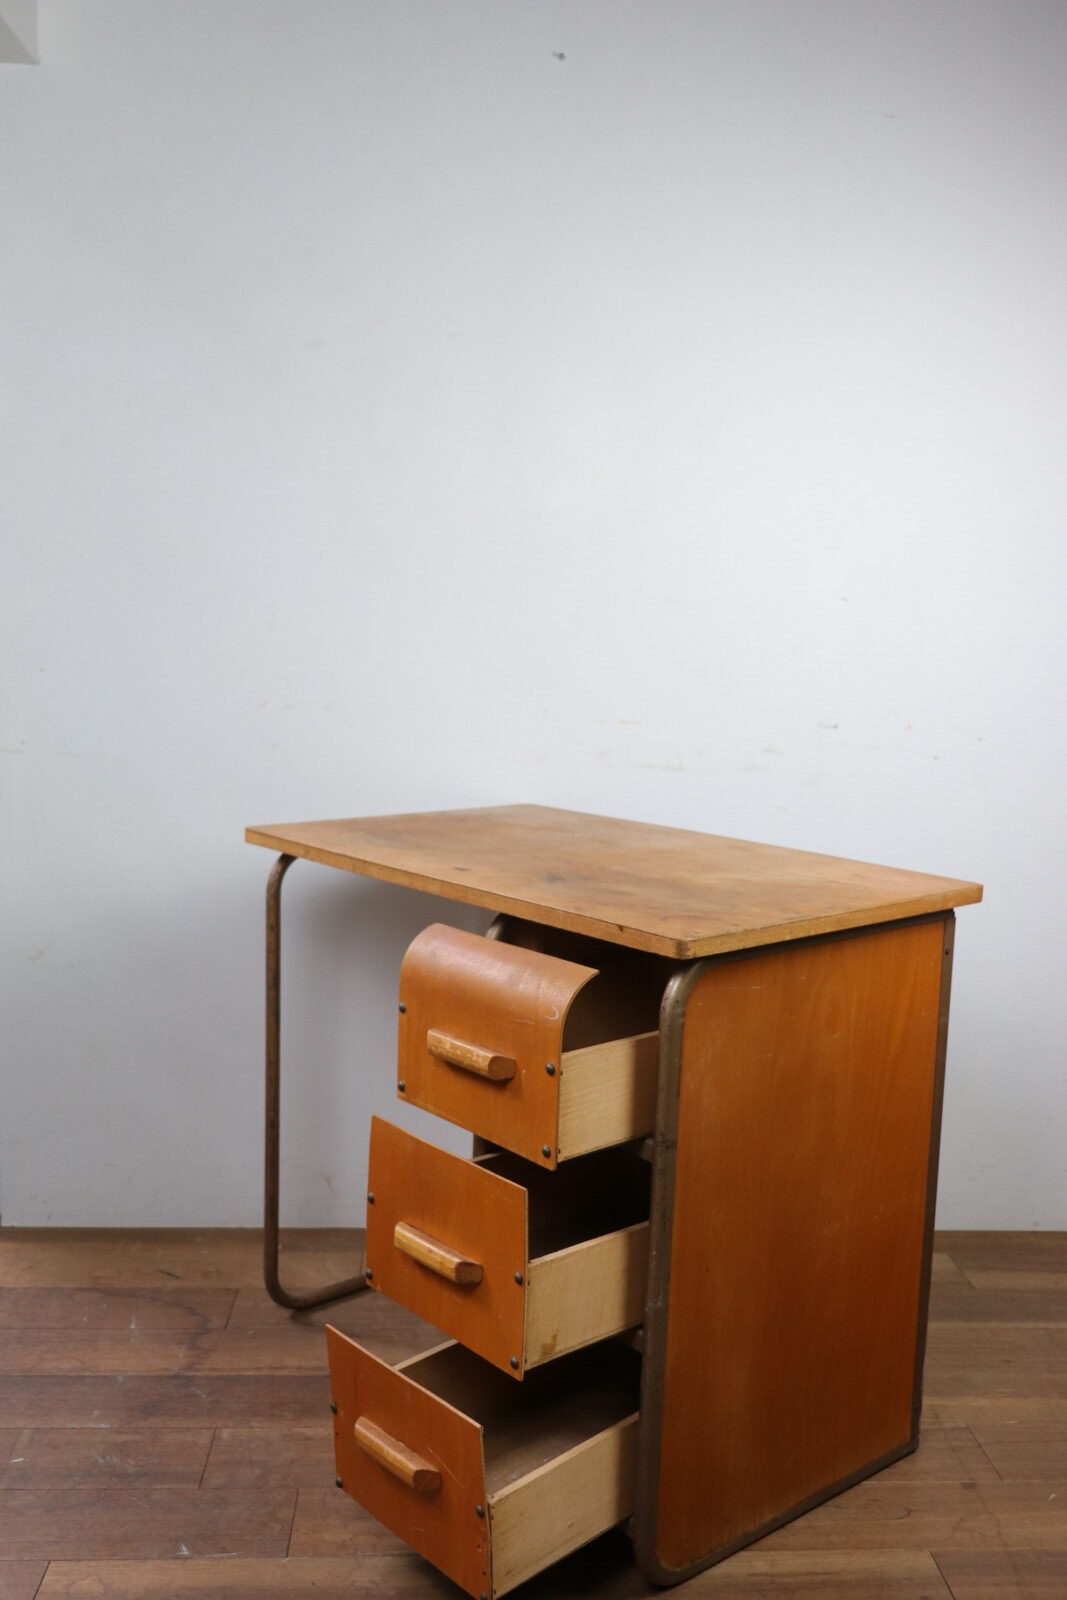 1940's,child desk,woodxmetal desk,france